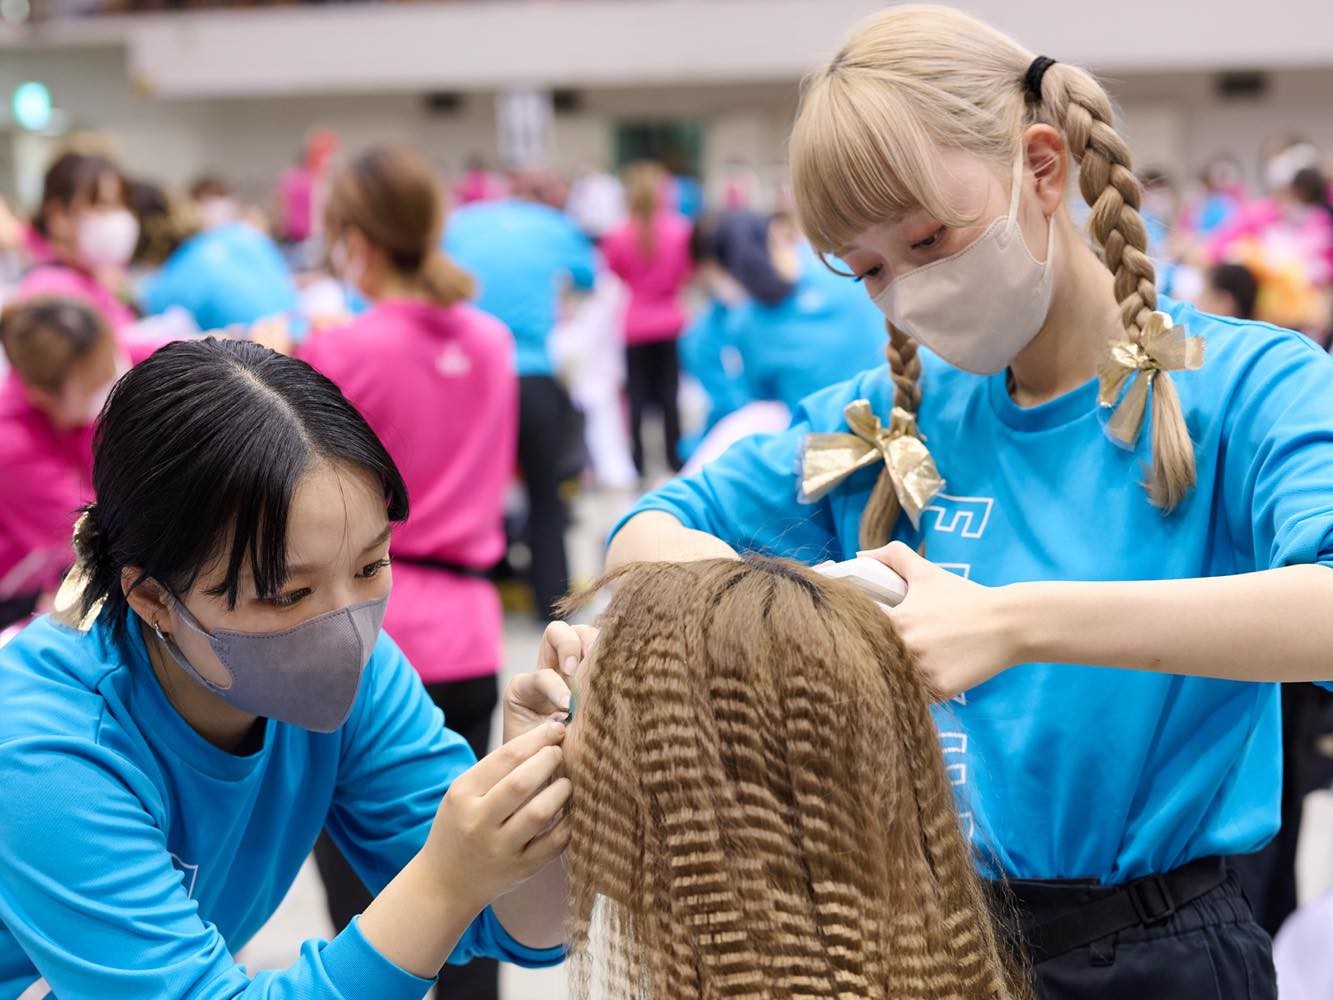 【FUKUBI Beauty Contest】 歴史と伝統のある美容技術大会。福岡校・北九州校の全学生900名が本気で競い合う熱い大会です。 